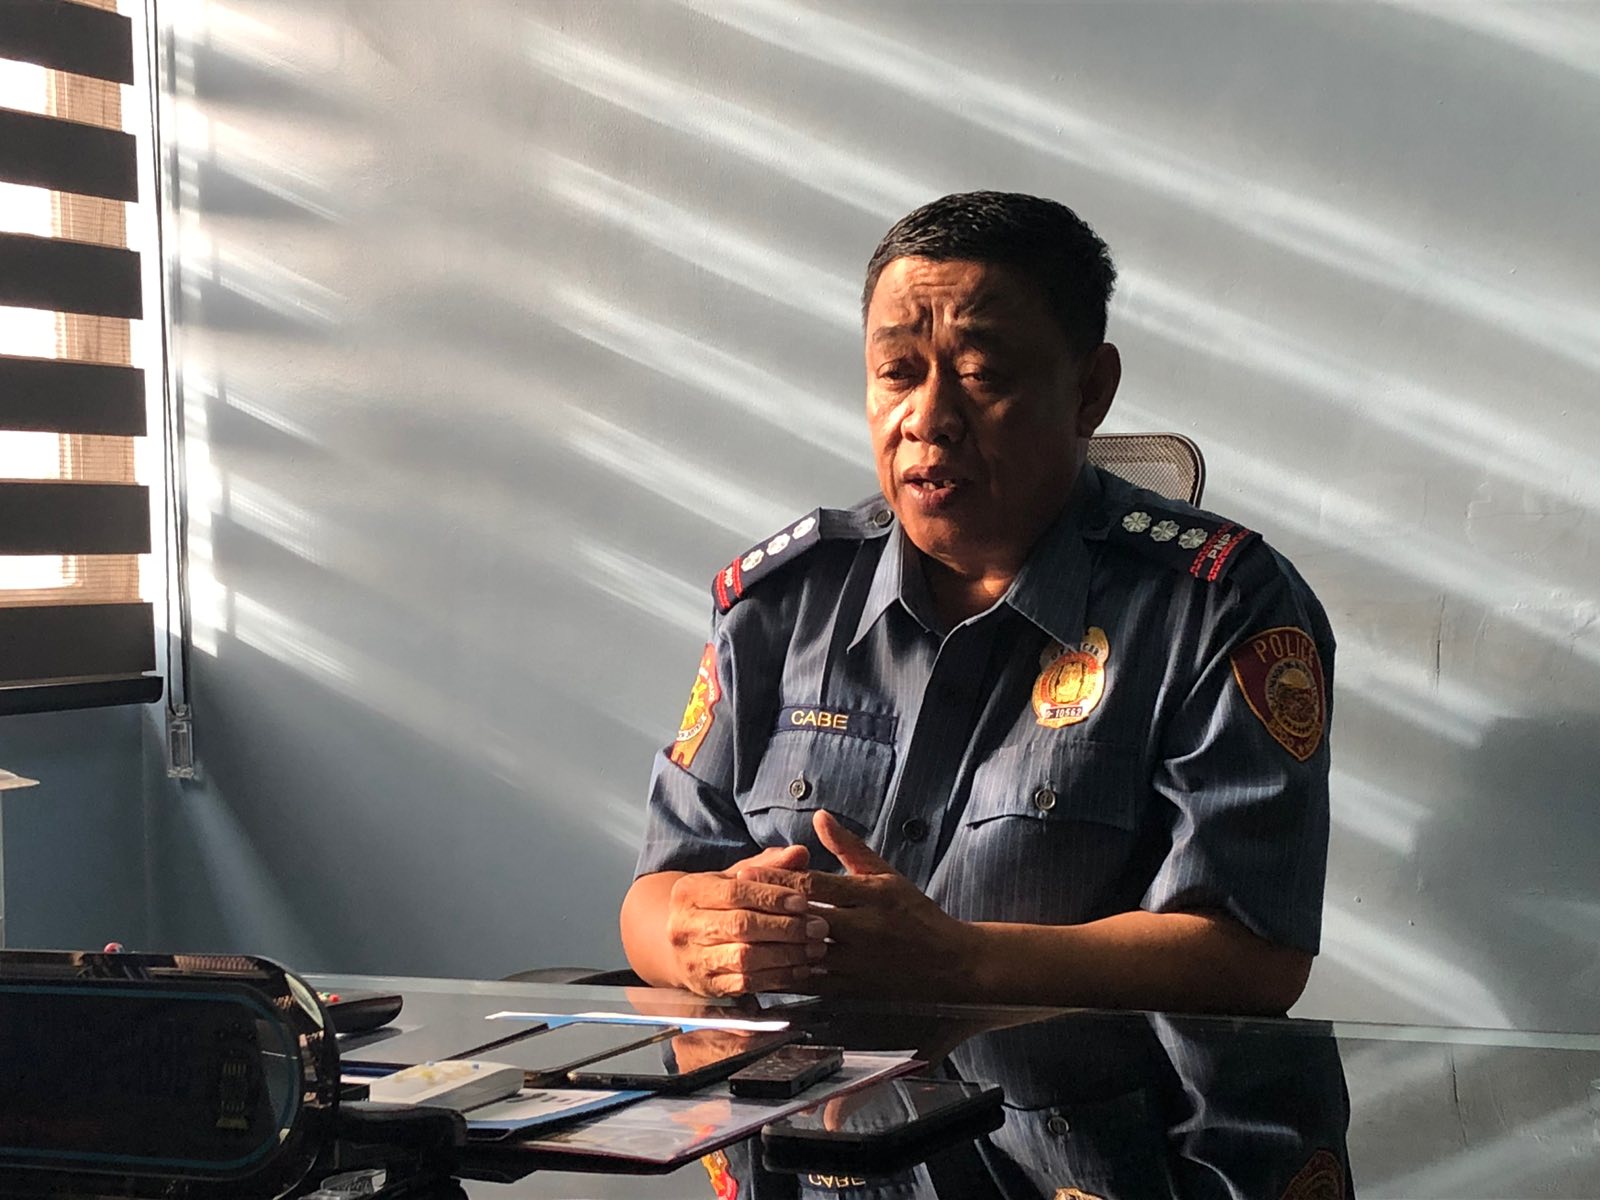 Muntinlupa police chief Col. Hermogenes Cabe